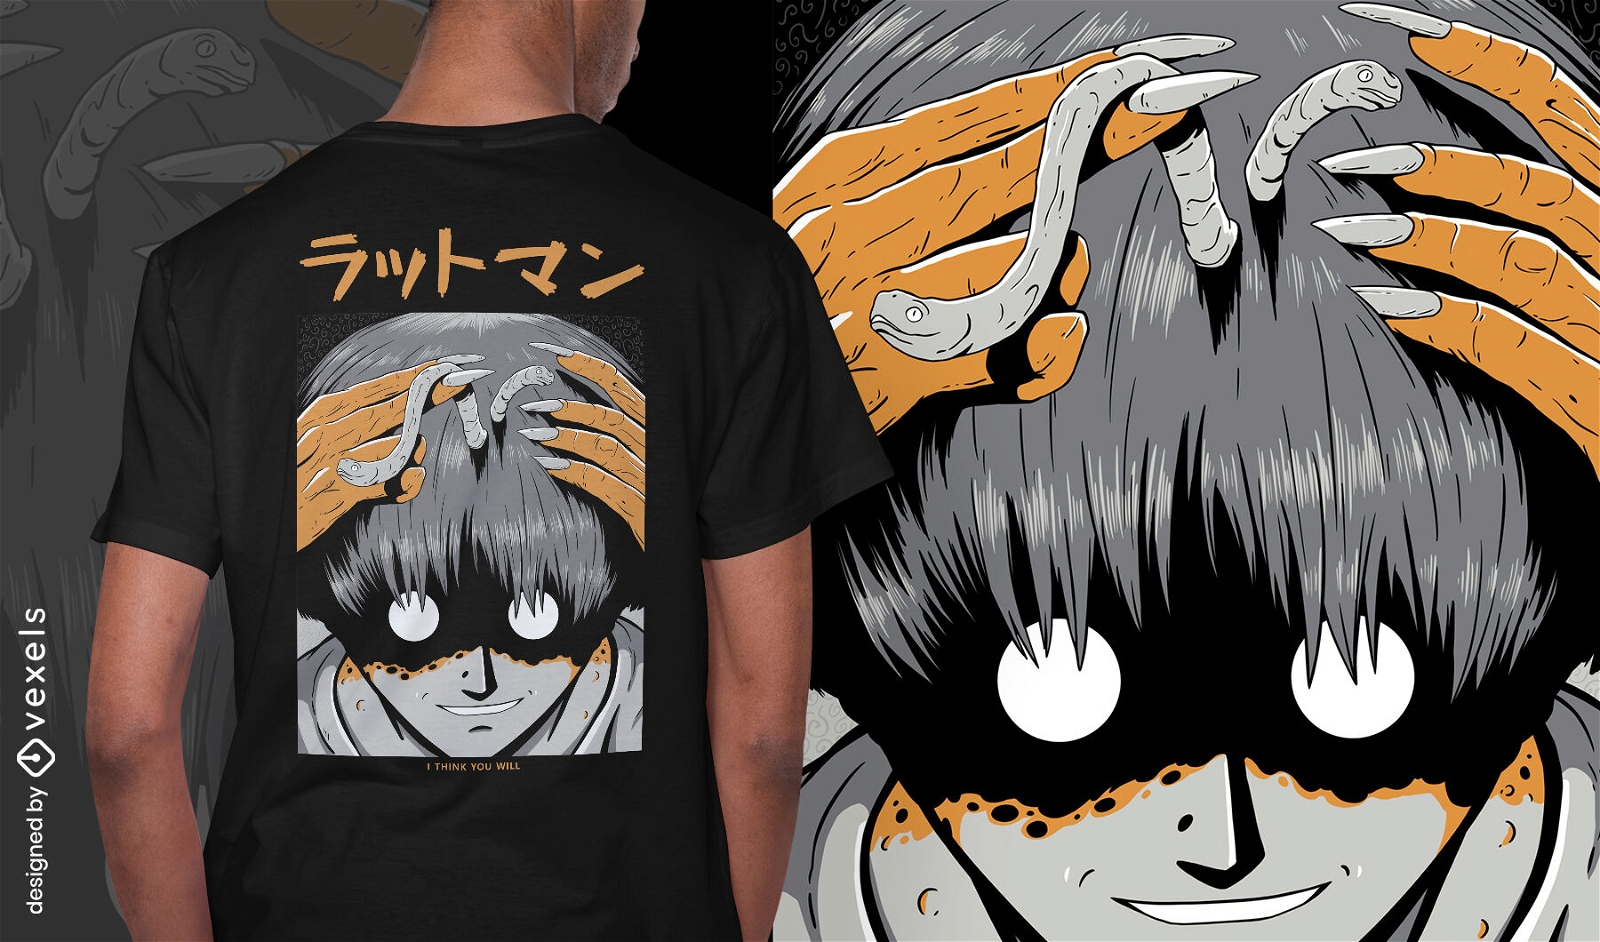 Japanese halloween monster creepy t-shirt design